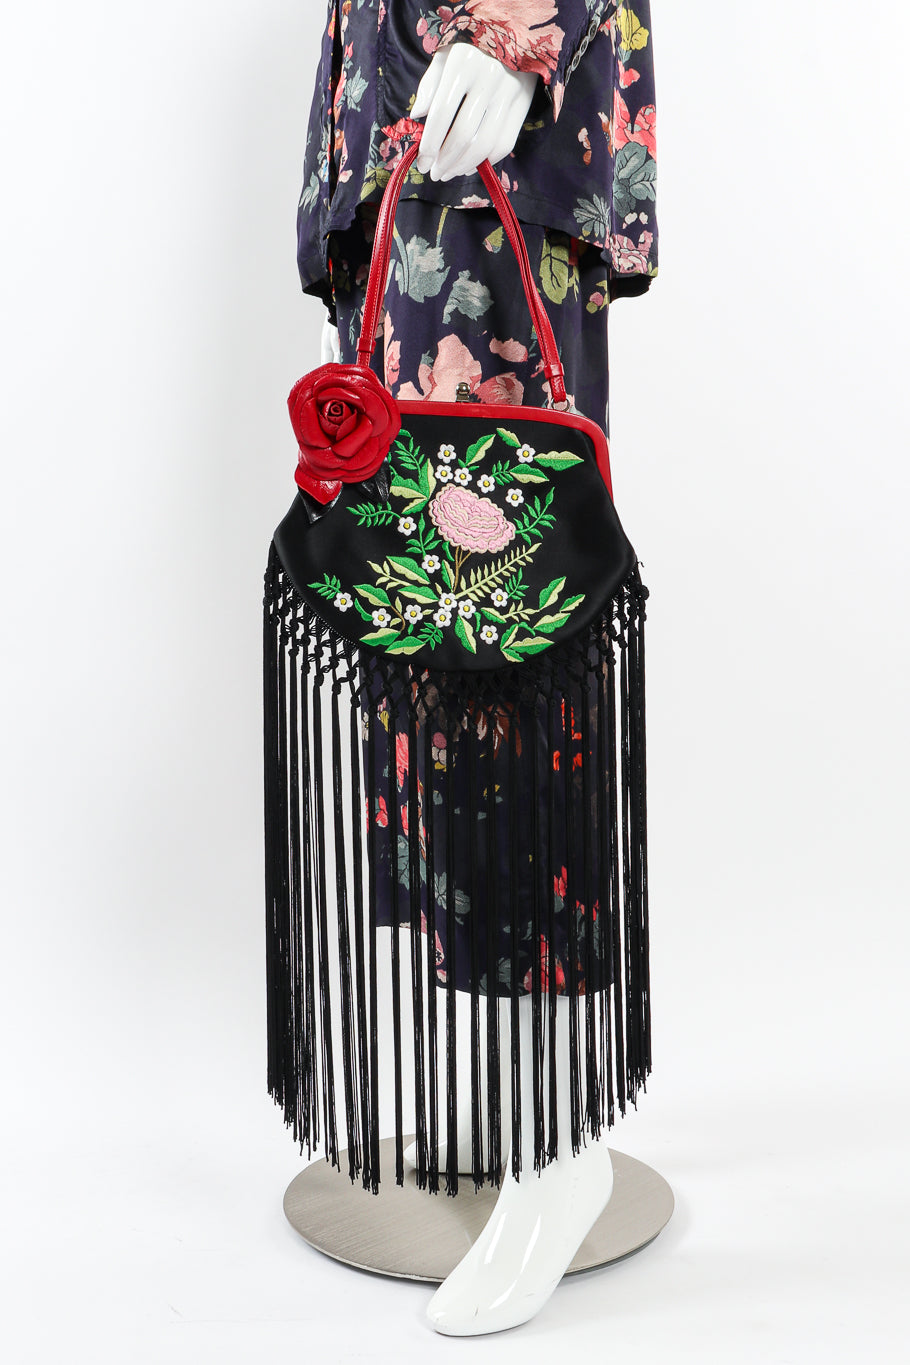 Fringe shoulder bag by Moschino held by mannequin wearing floral suit @recessla